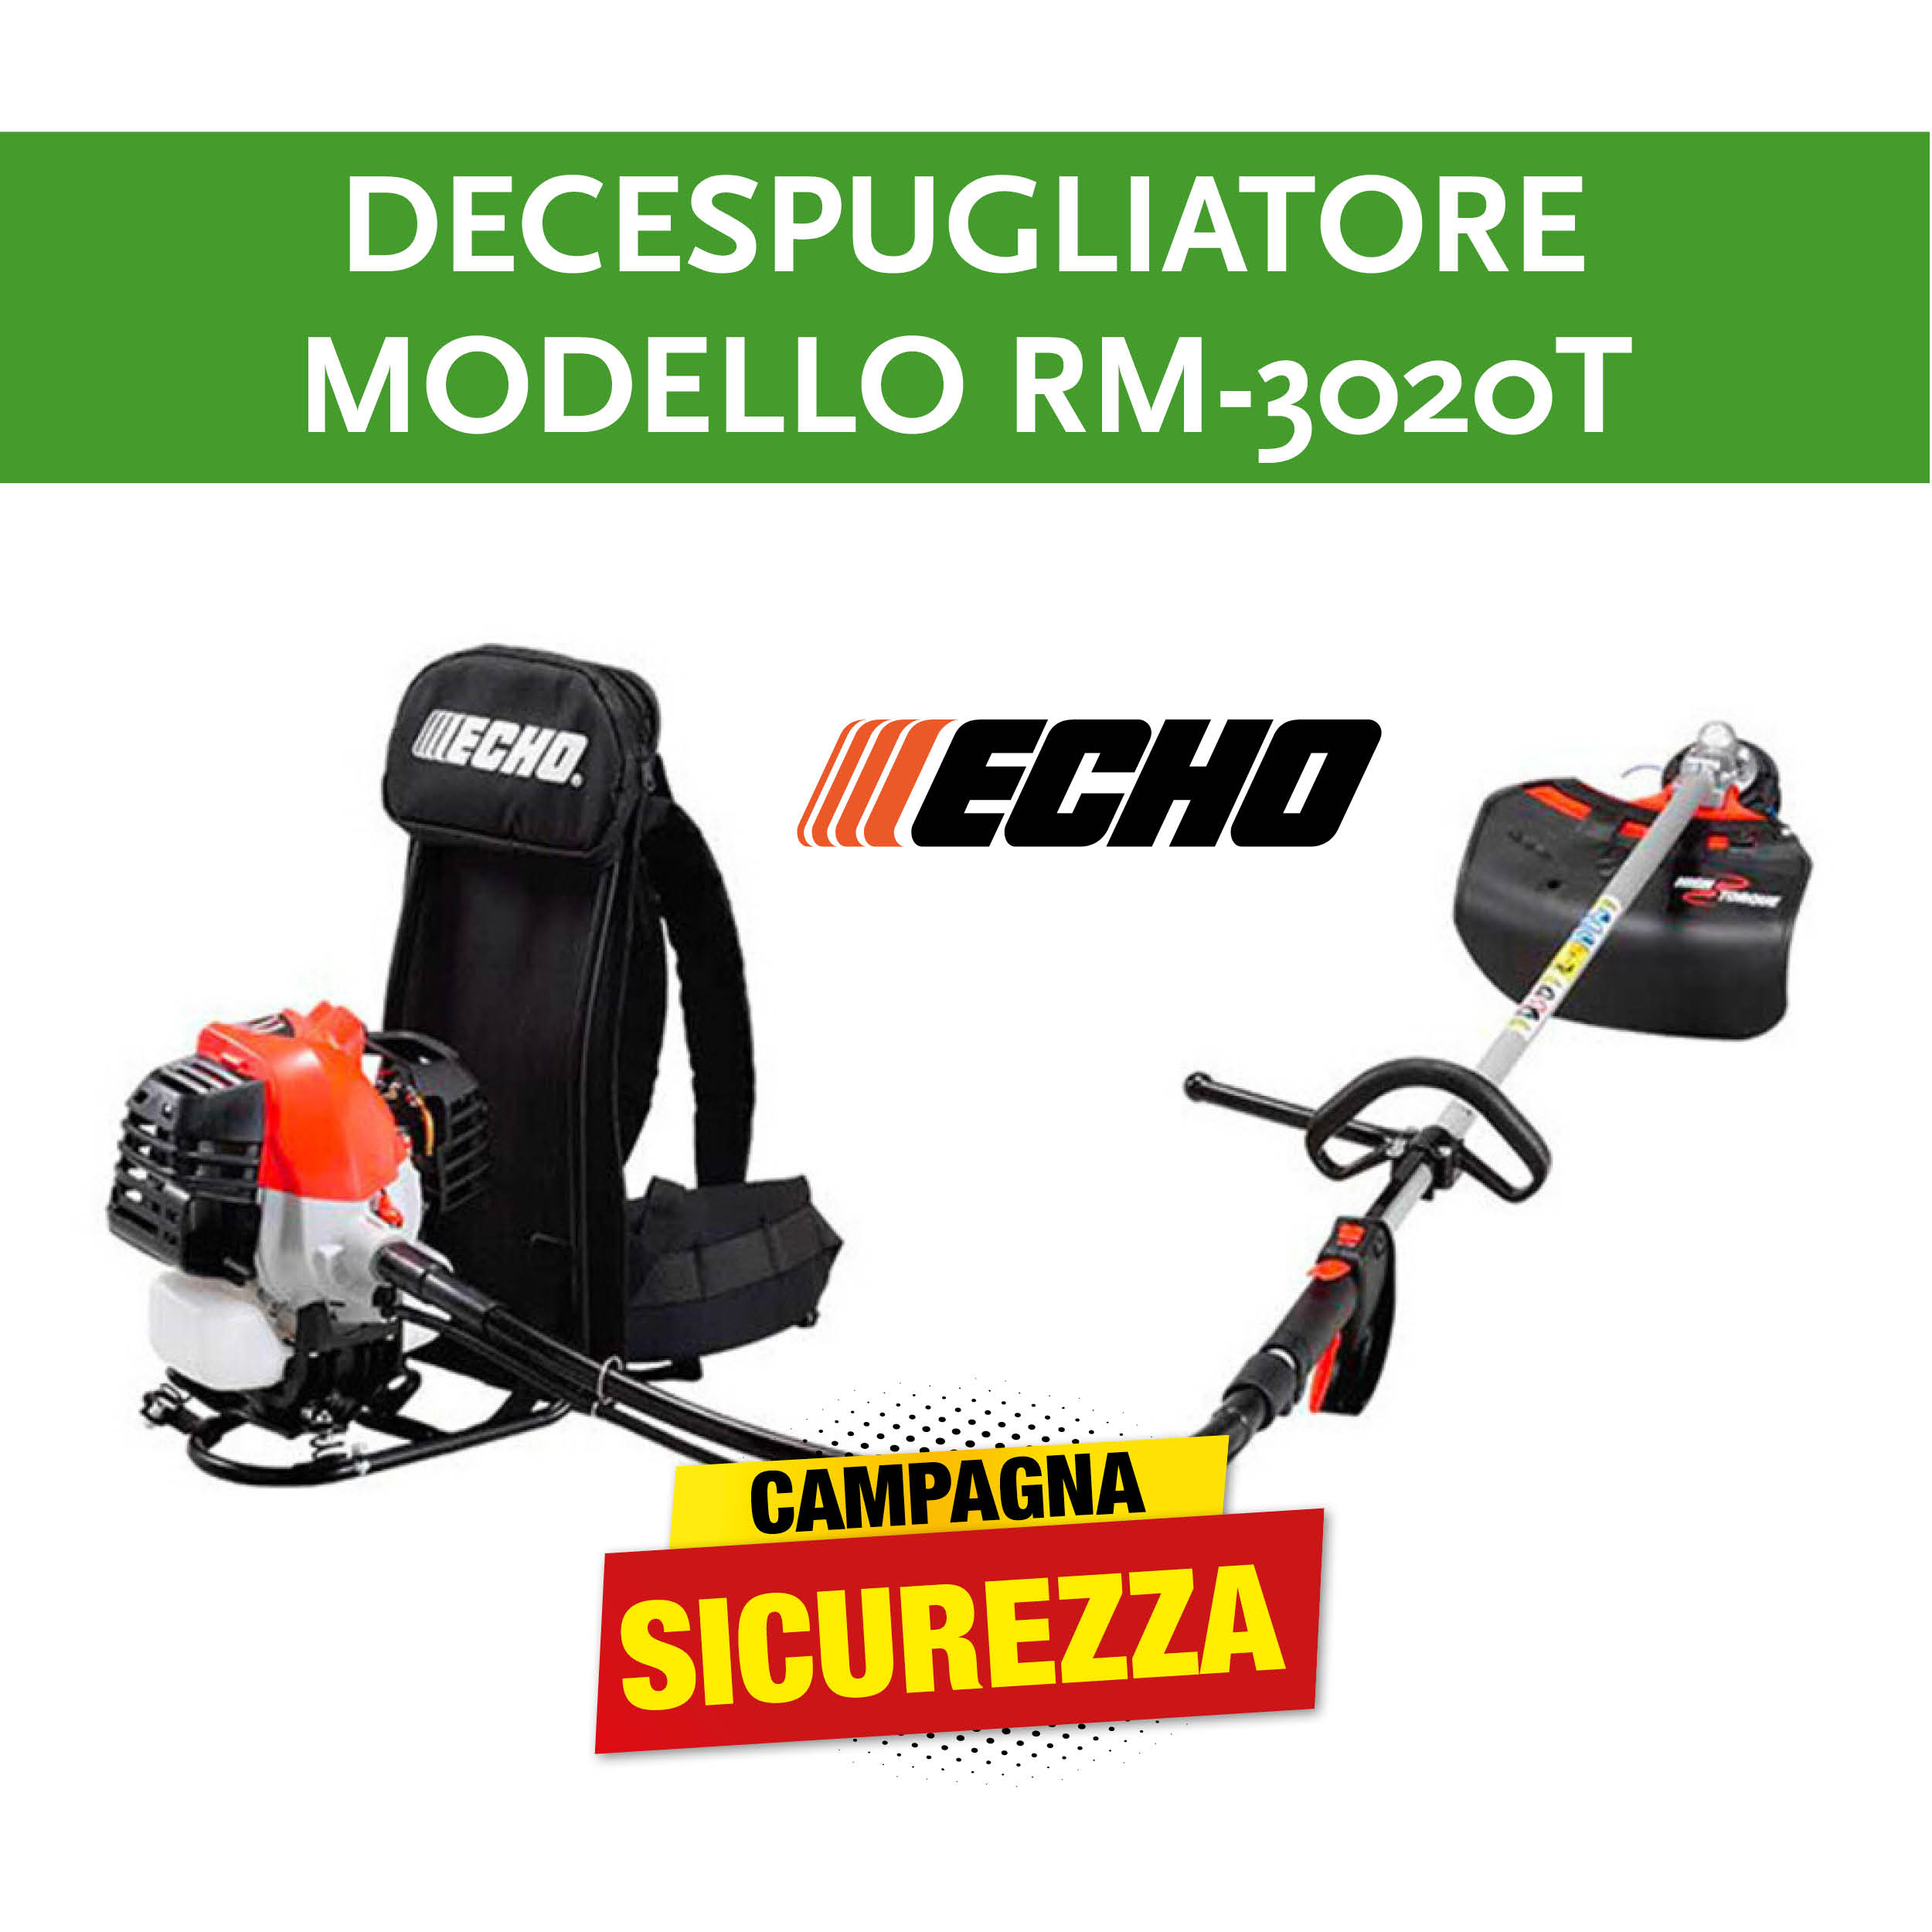 SAV Trentino Decespugliatore 3020T offerta